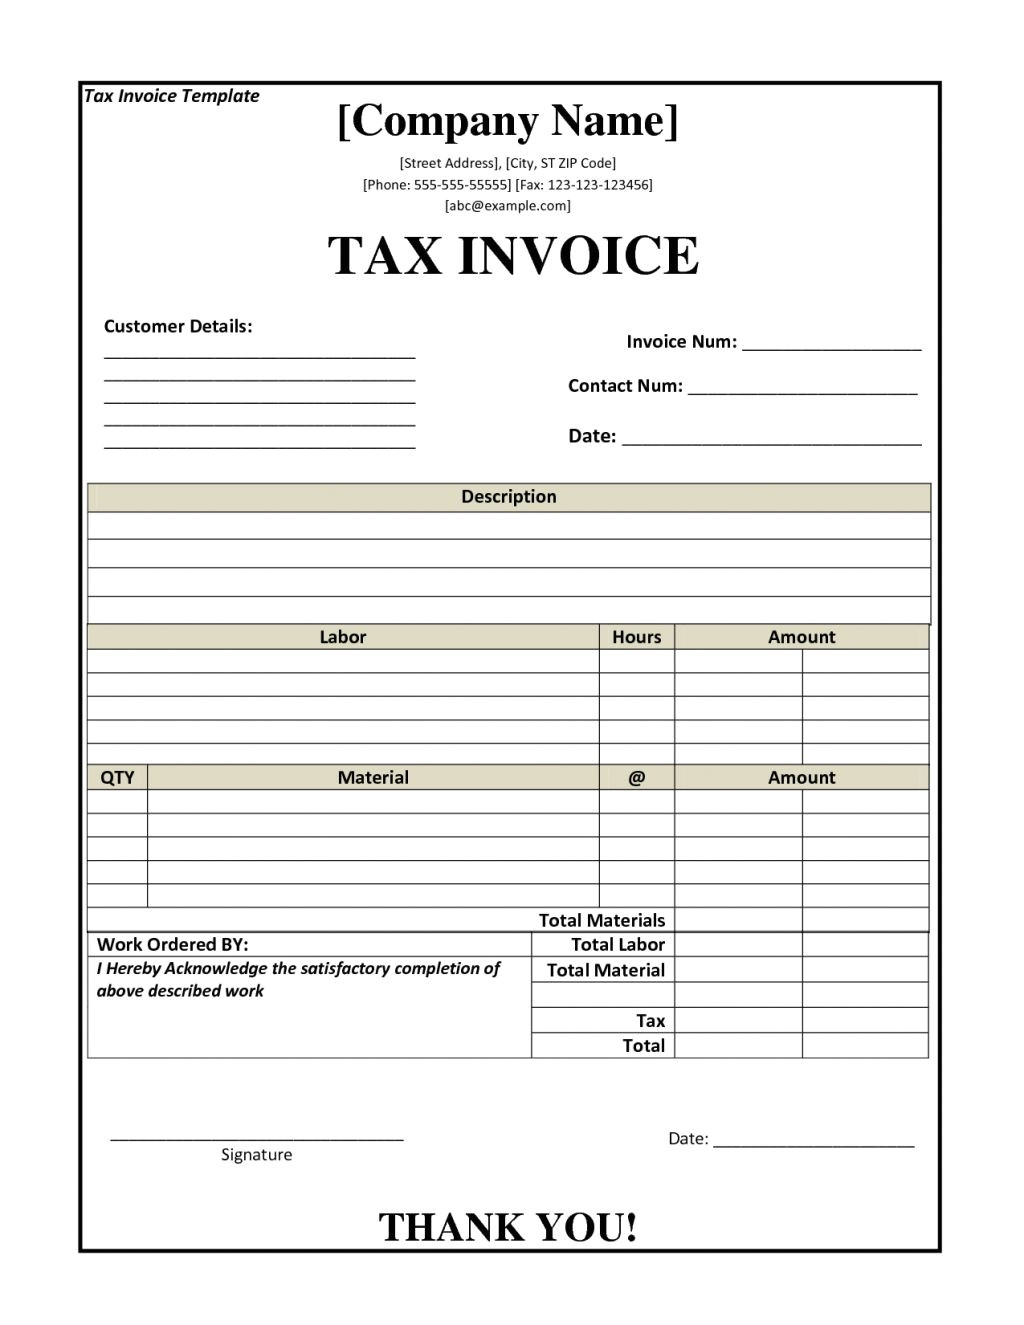 tax invoice receipt template